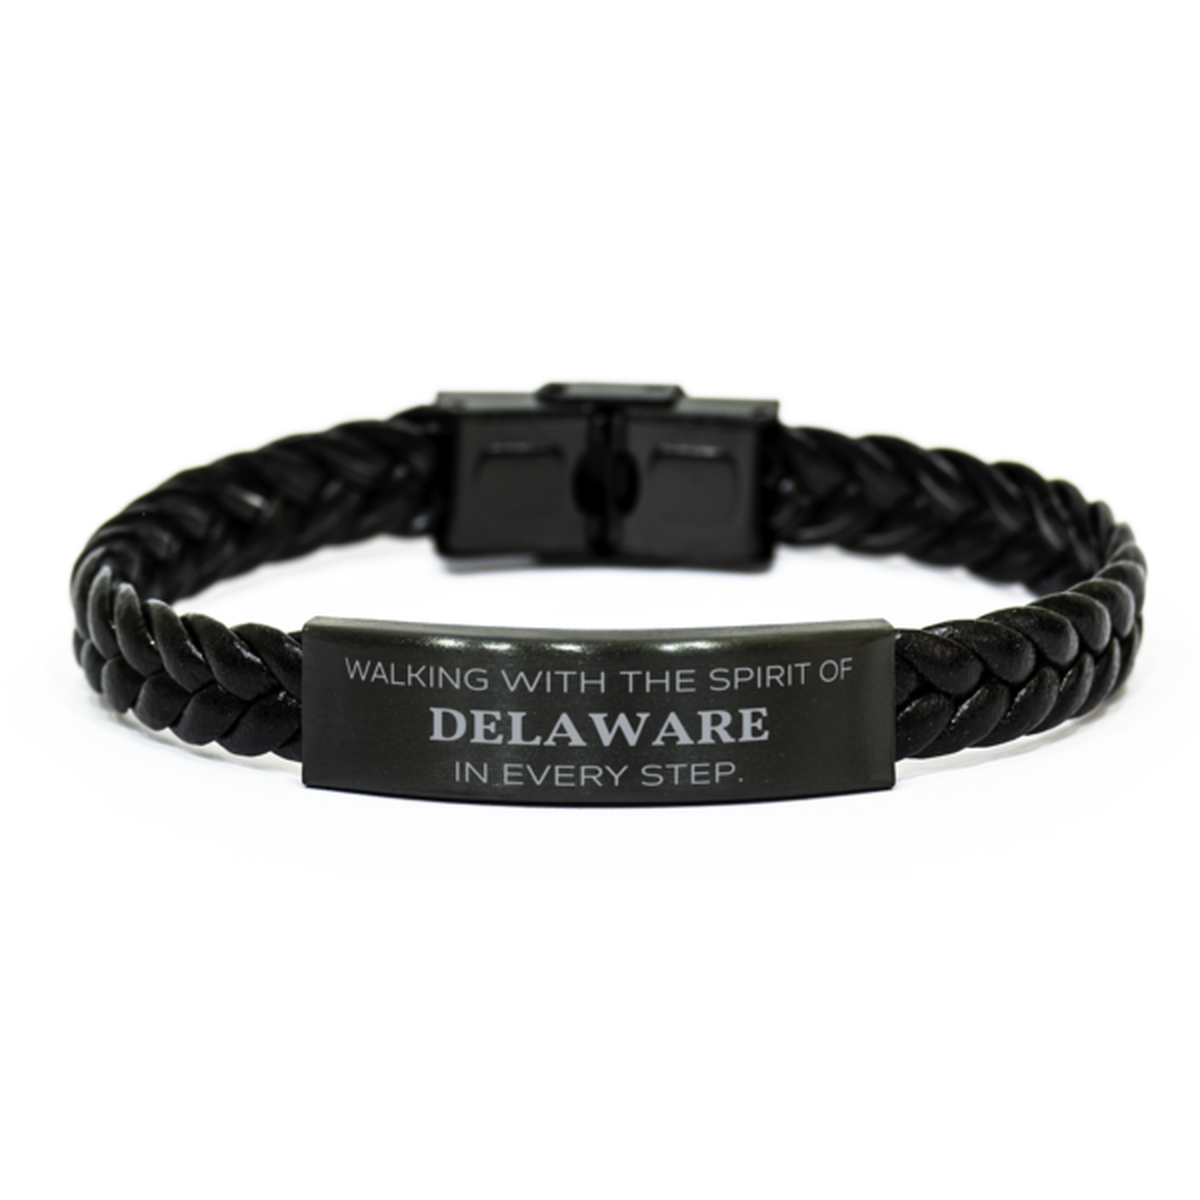 Delaware Gifts, Walking with the spirit, Love Delaware Birthday Christmas Braided Leather Bracelet For Delaware People, Men, Women, Friends